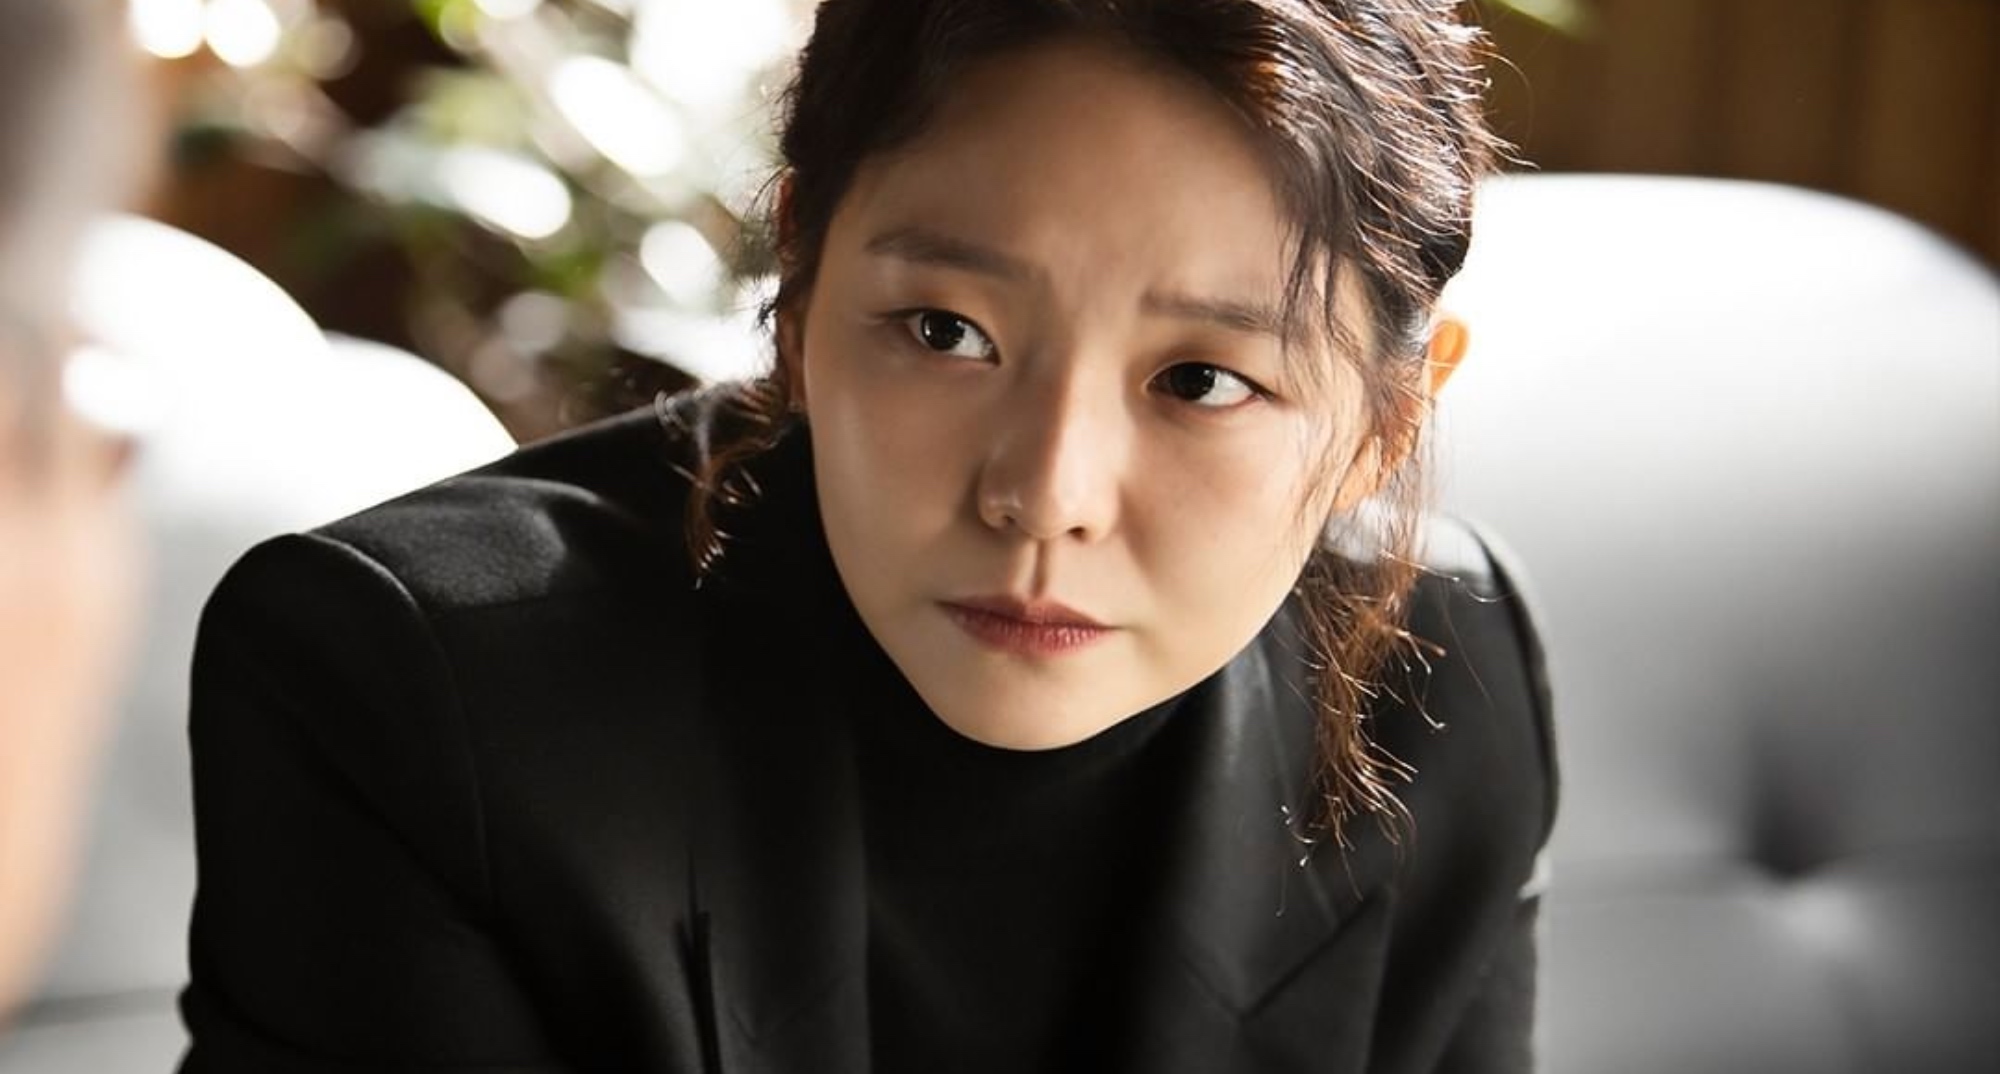 Esom as Ha-na in 'Taxi Driver' K-drama wearing black turtleneck in relation so season 2.